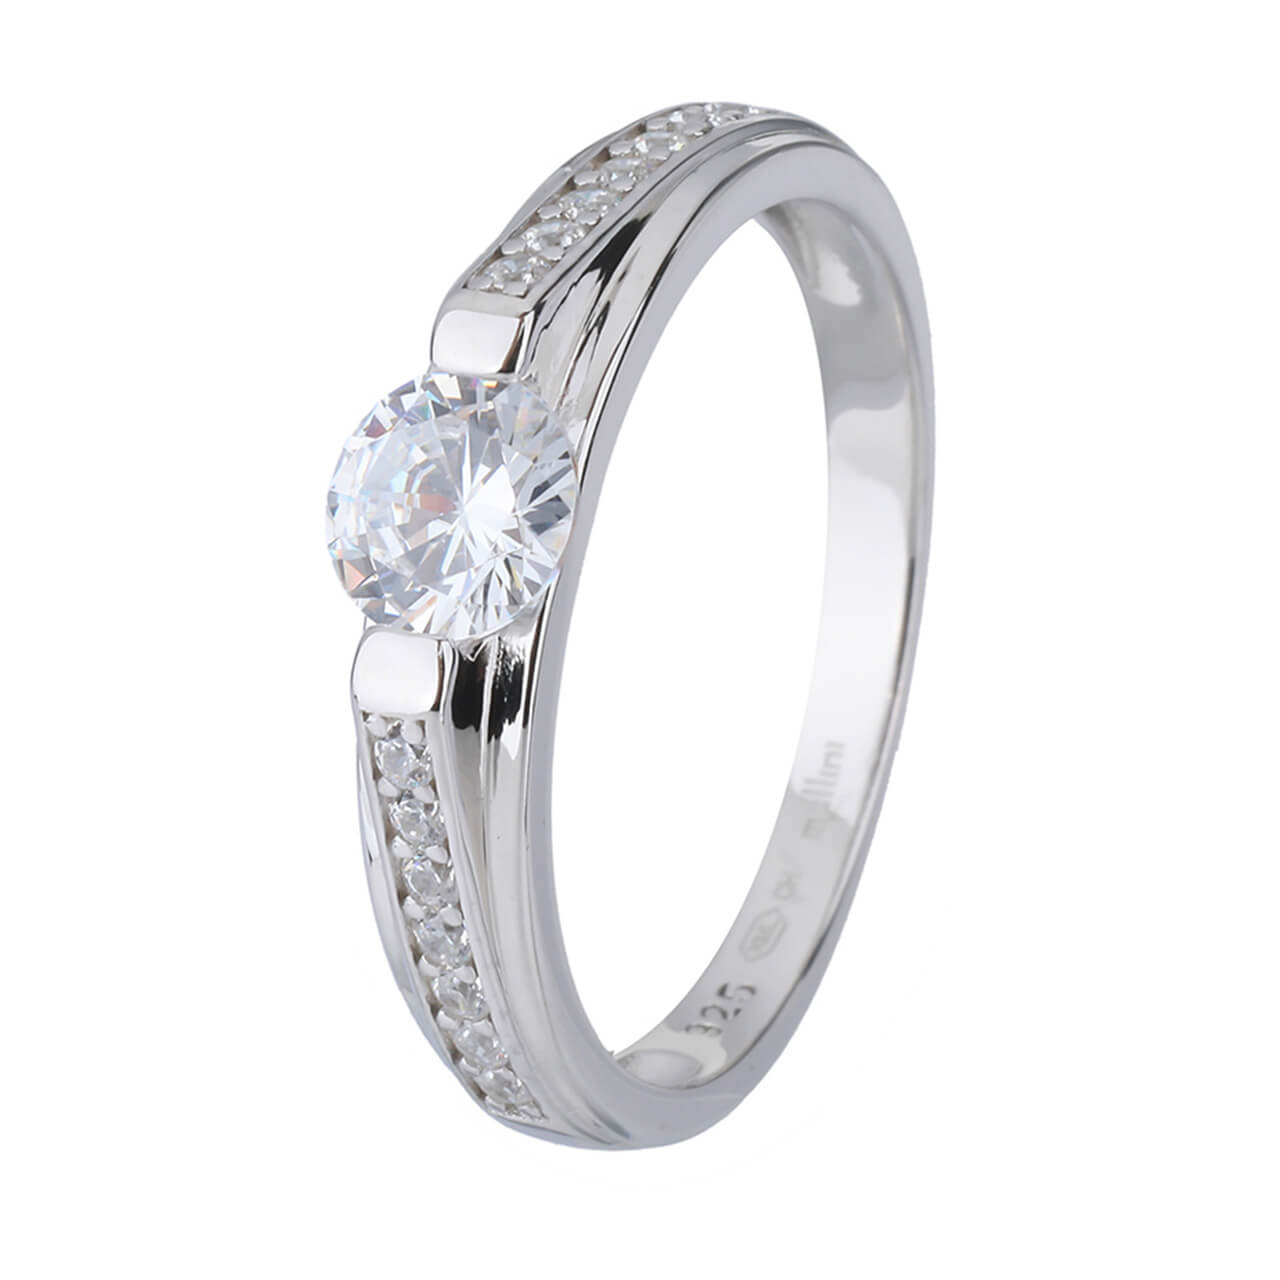 Stříbrný prsten SOLITÉR výrazný Velikost prstenu: 59 Ag 925/1000